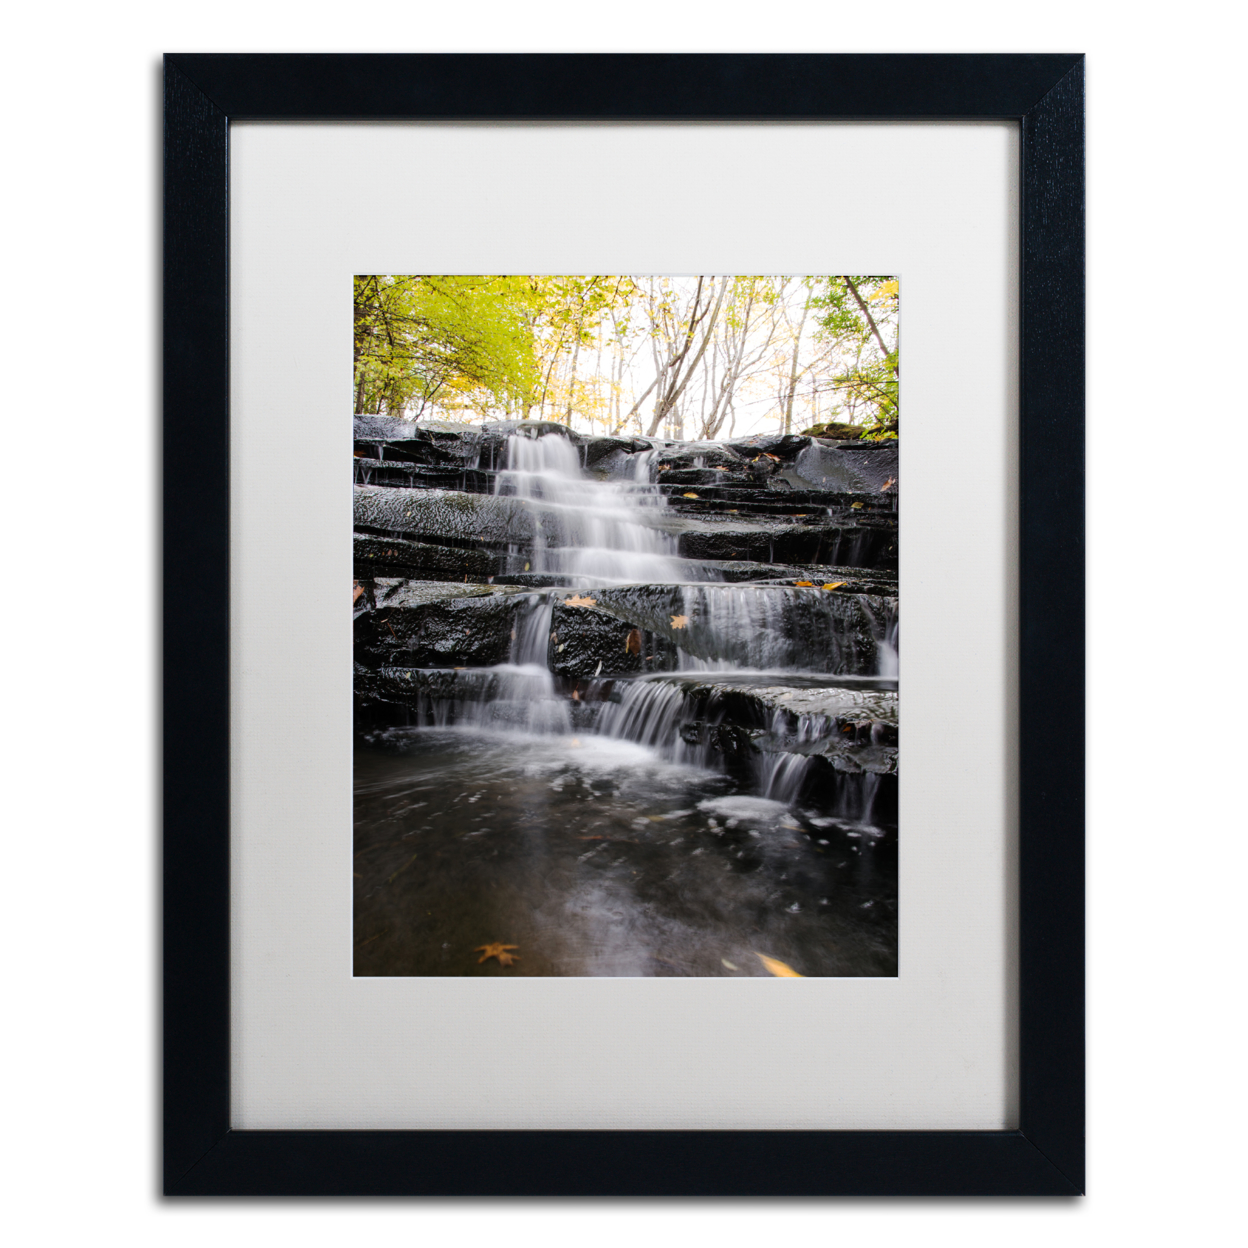 Kurt Shaffer 'Waterfall At Lake View' Black Wooden Framed Art 18 X 22 Inches